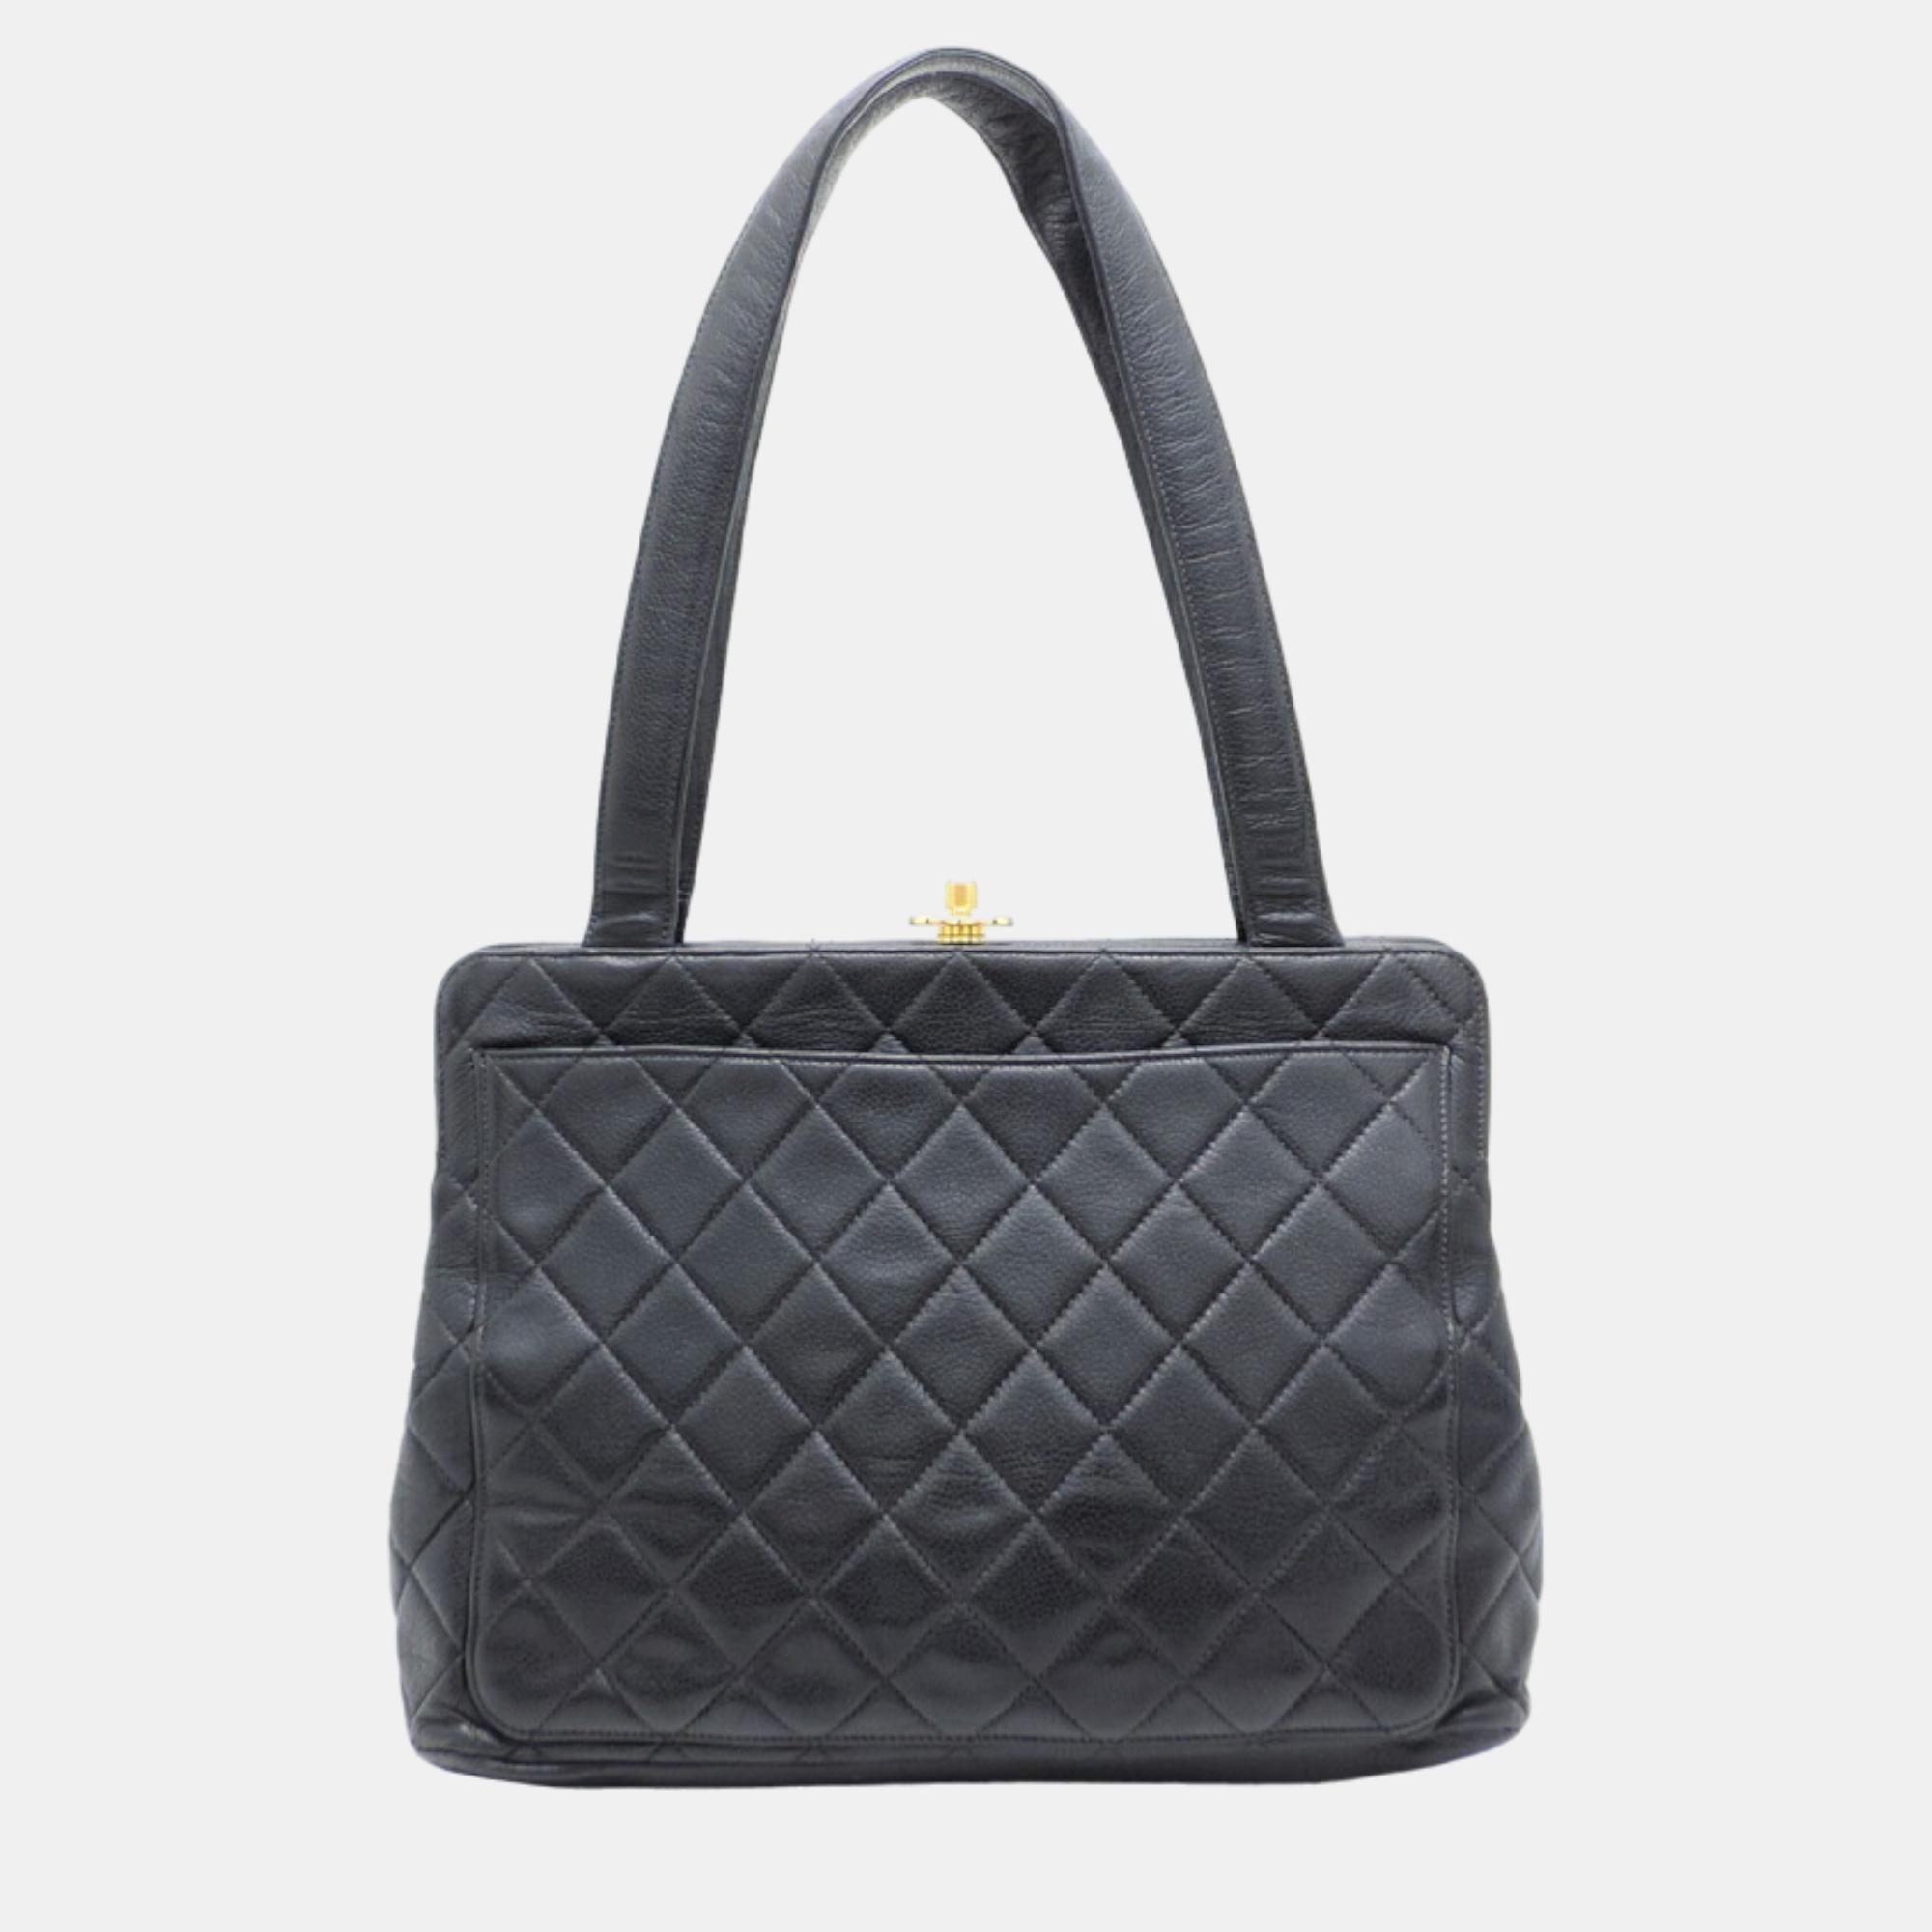 Chanel black leather cc caviar turnlock shoulder bag